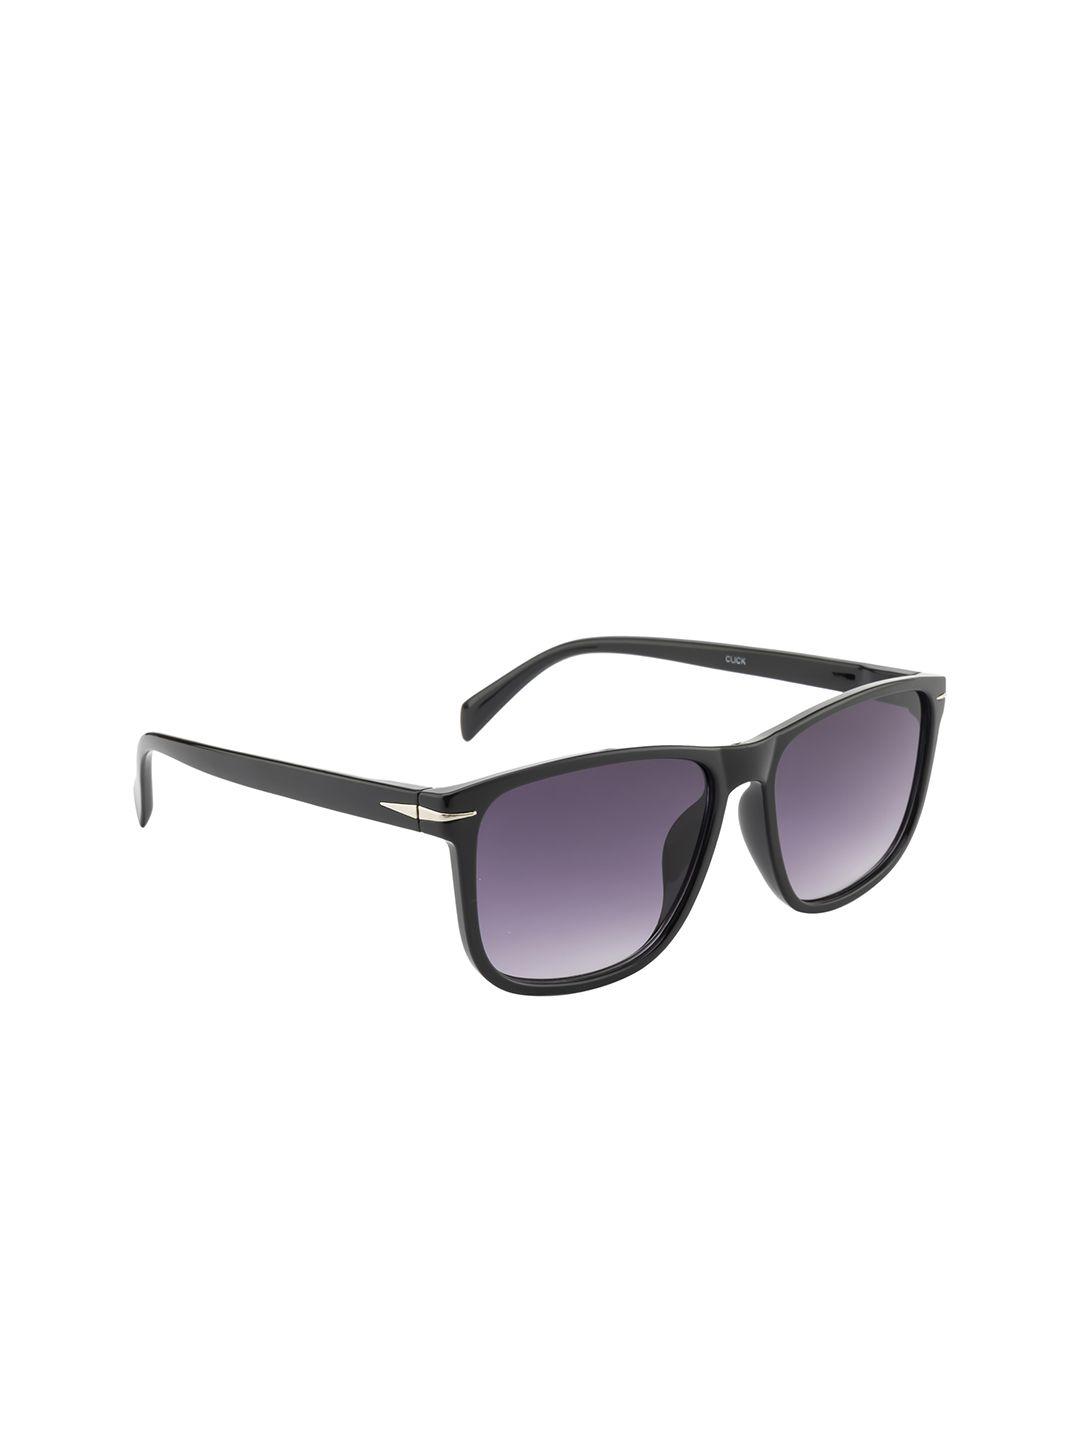 mast-&-harbour-full-rim-square-sunglasses-with-uv-protected-lens-mh-m25144